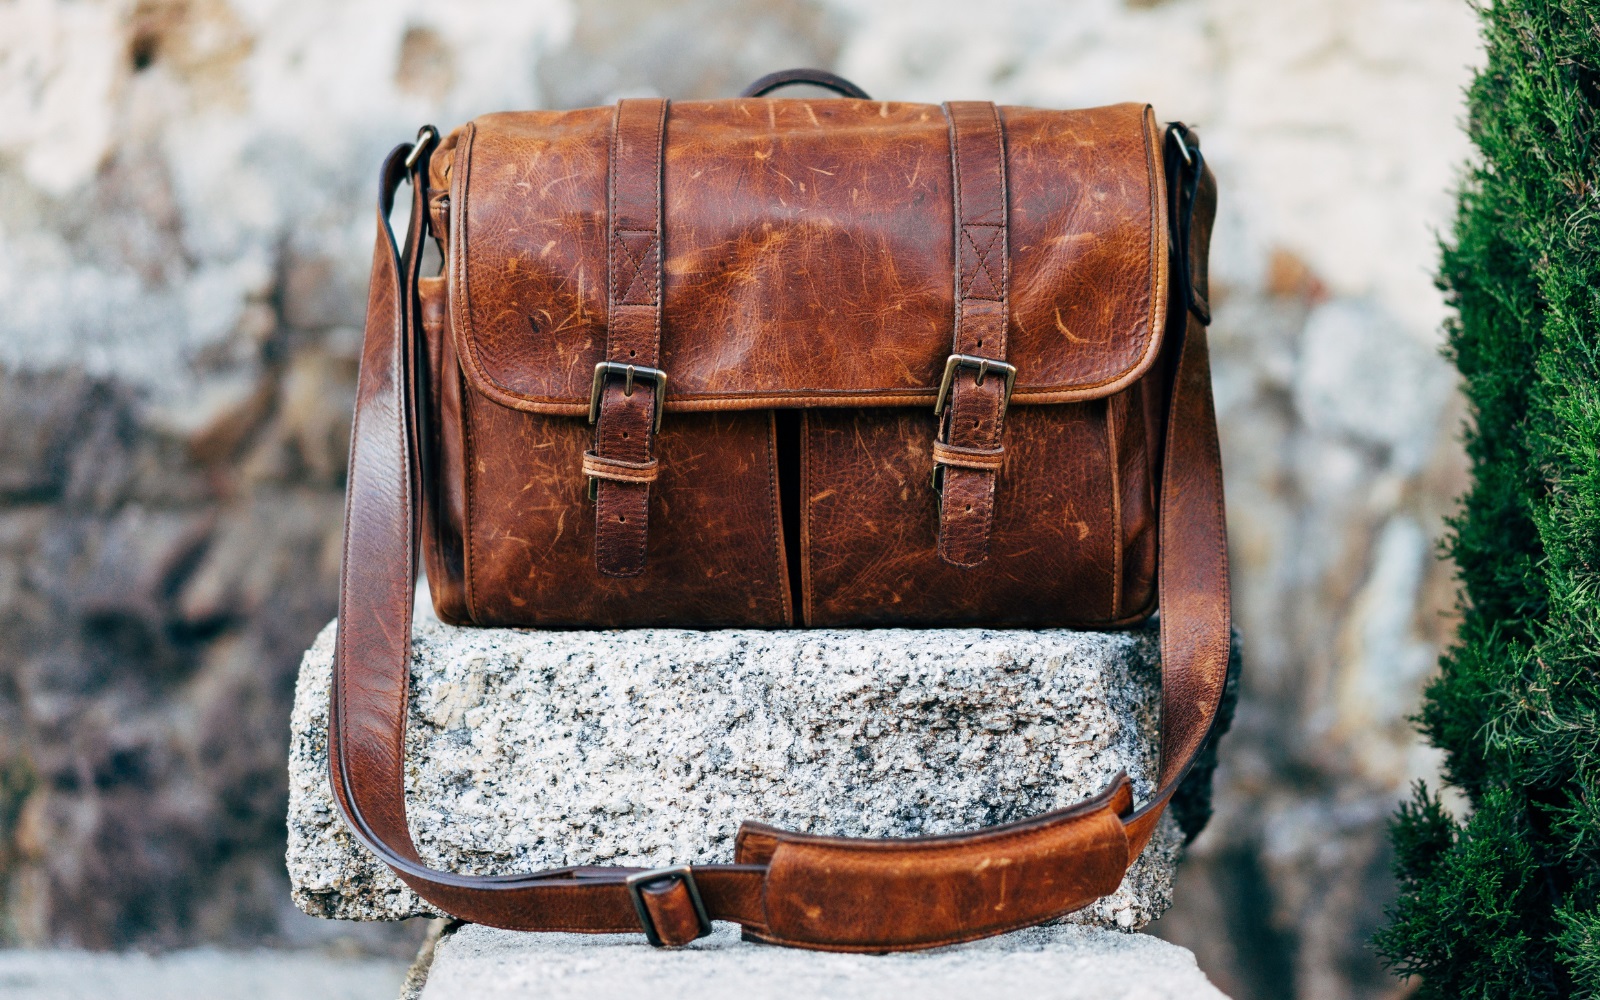 Leather Company Names For A Handbag Biz.